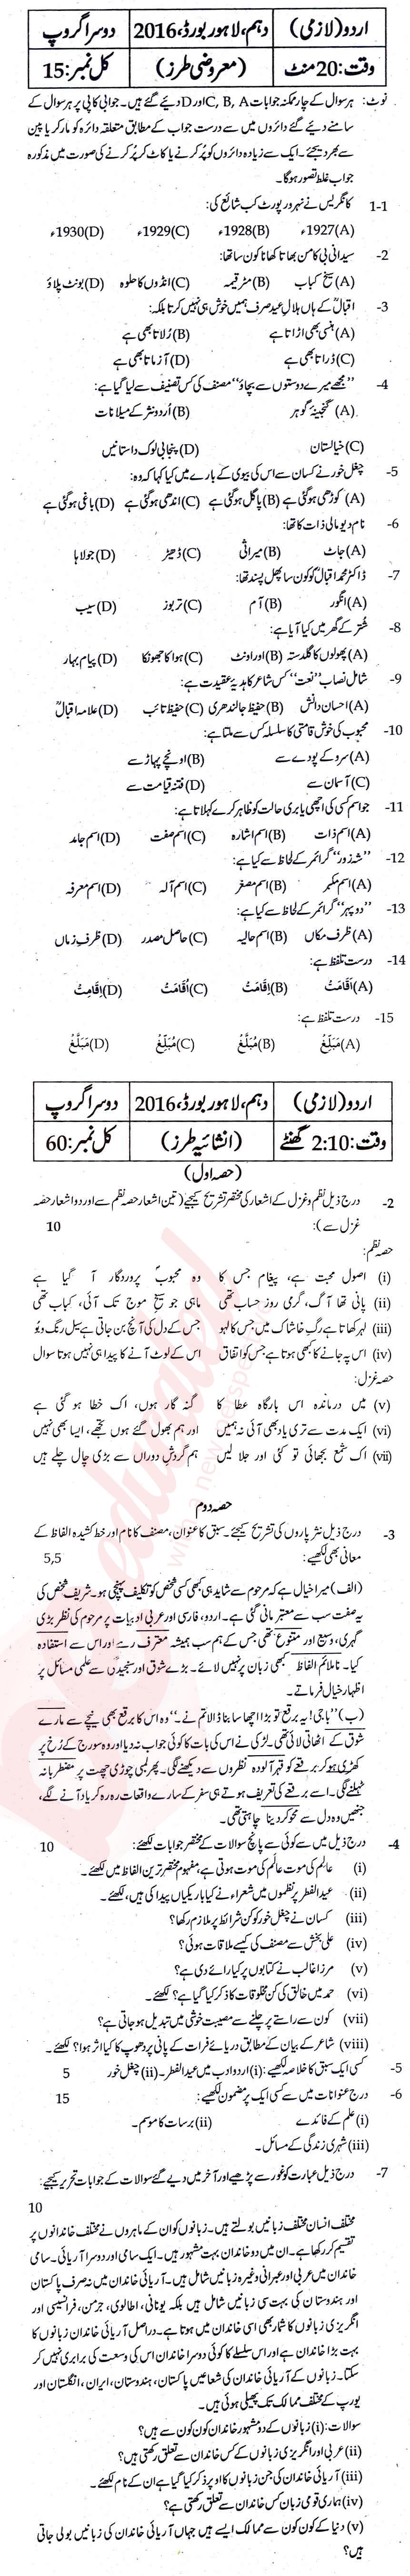 Urdu 10th class Past Paper Group 2 BISE Lahore 2016